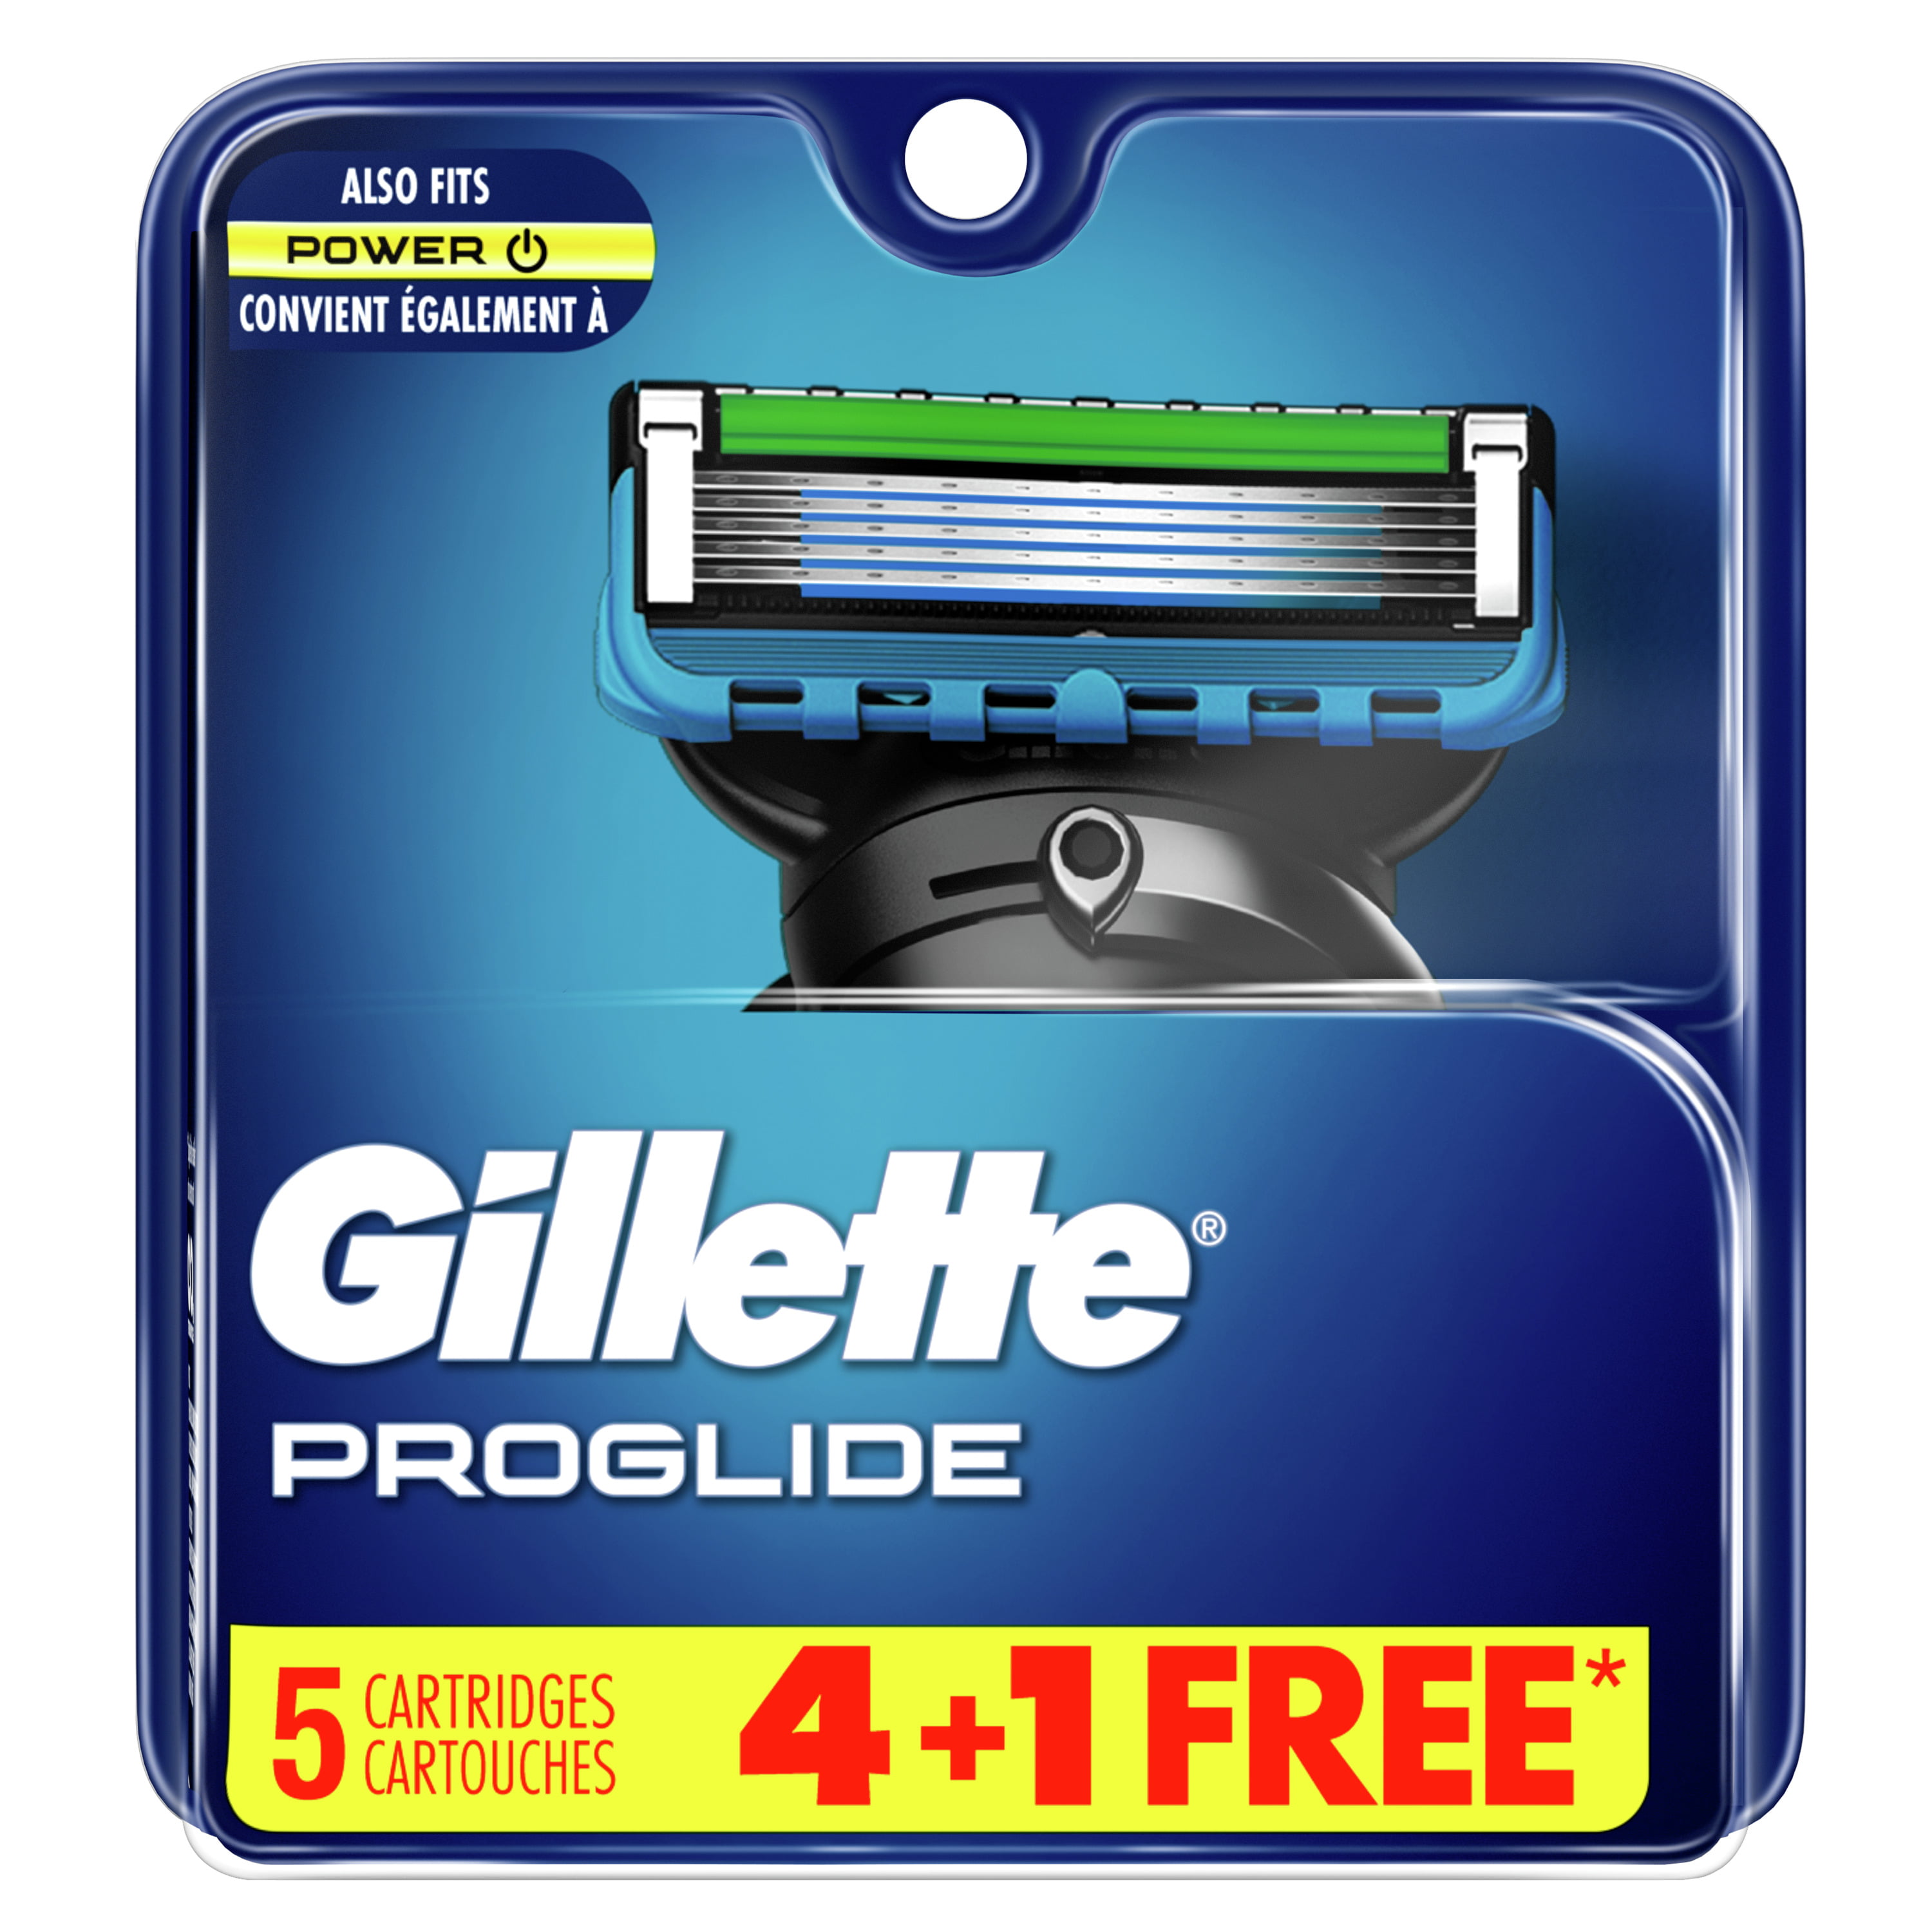 Gillette razor deals